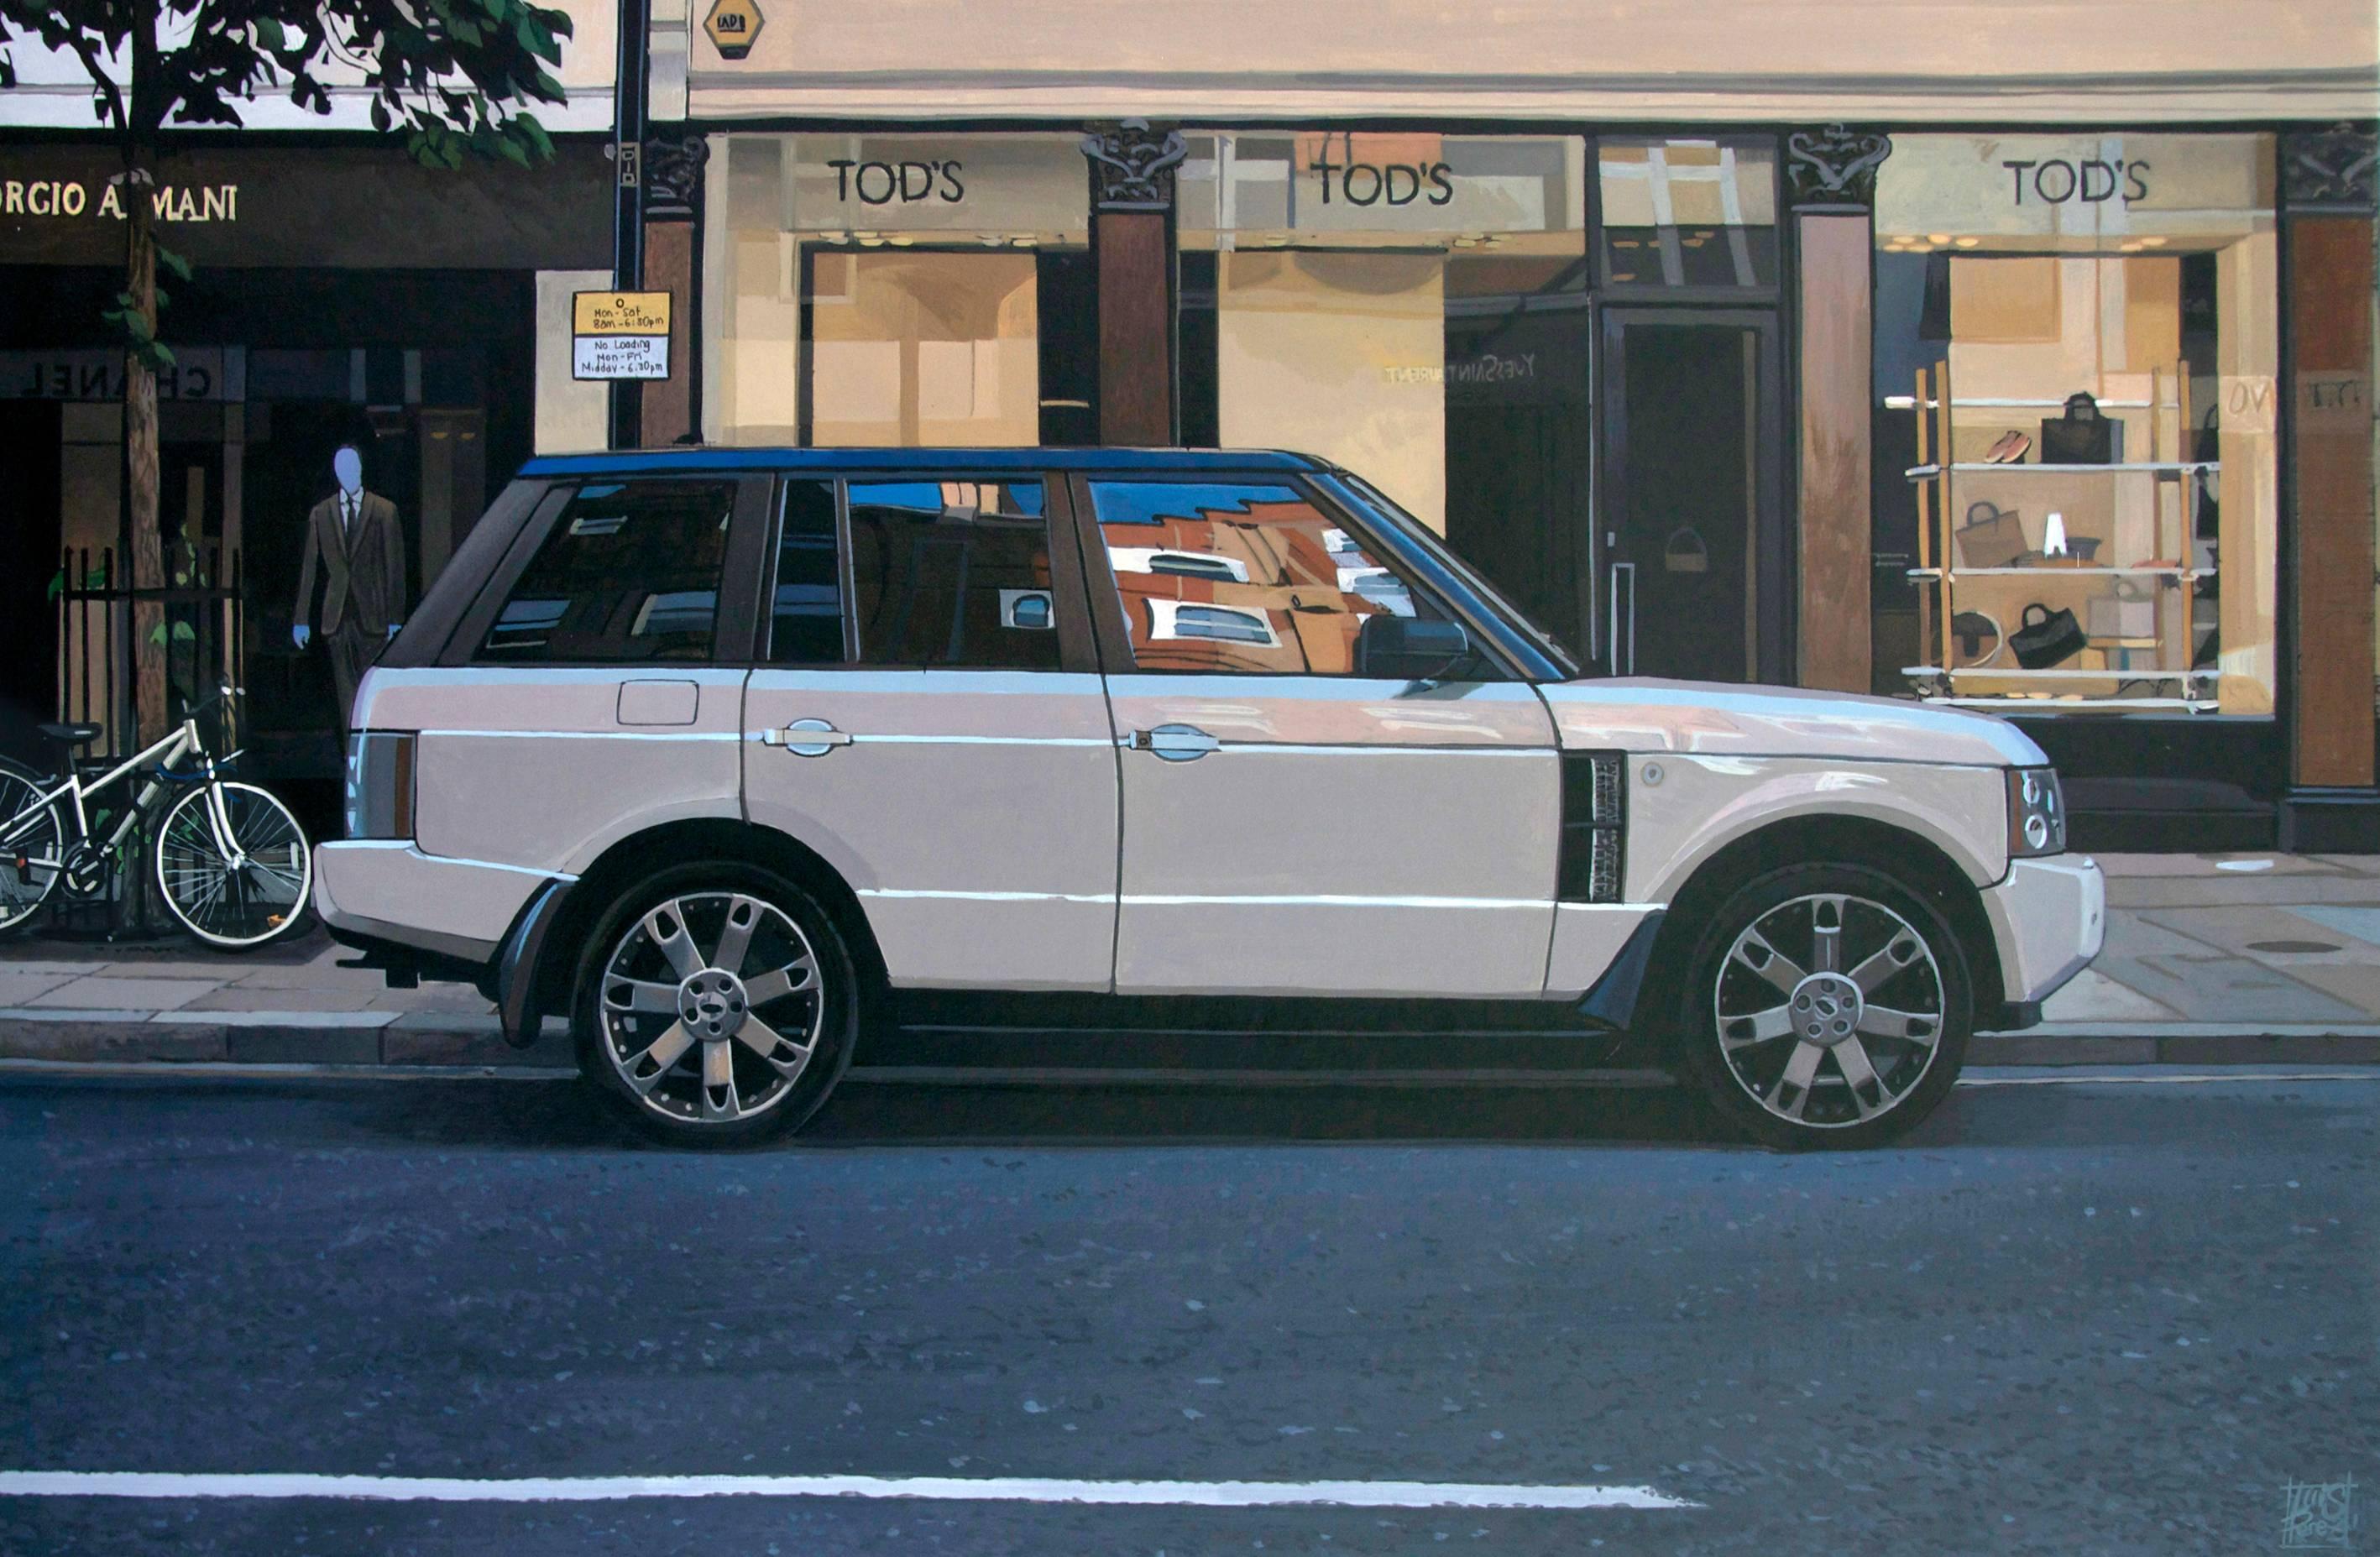 Sloane Avenue/Range Rover - Painting by Luis Perez